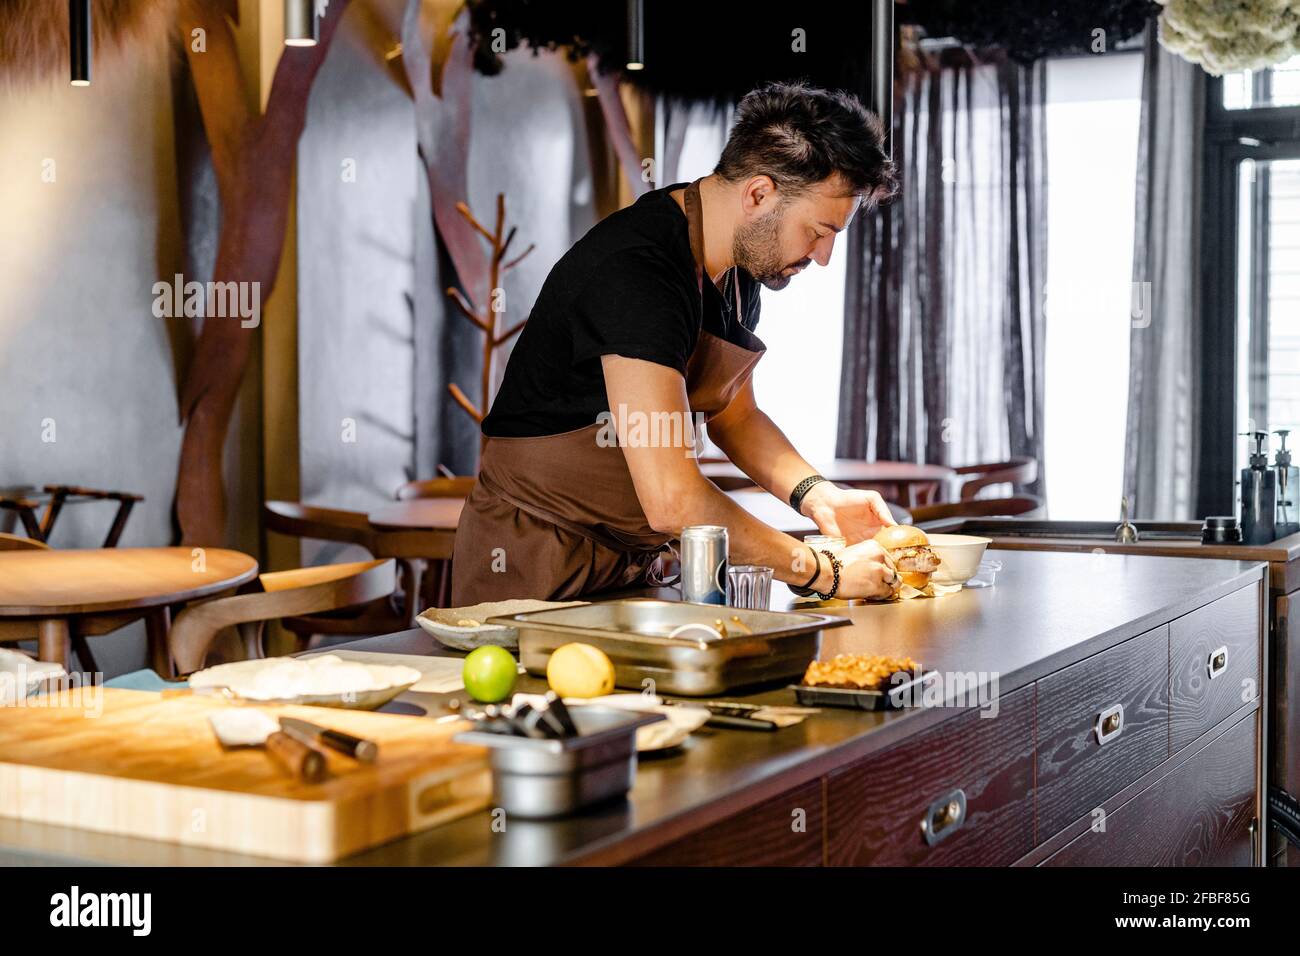 Male chef preparing food on kitchen island at restaurant Stock Photo